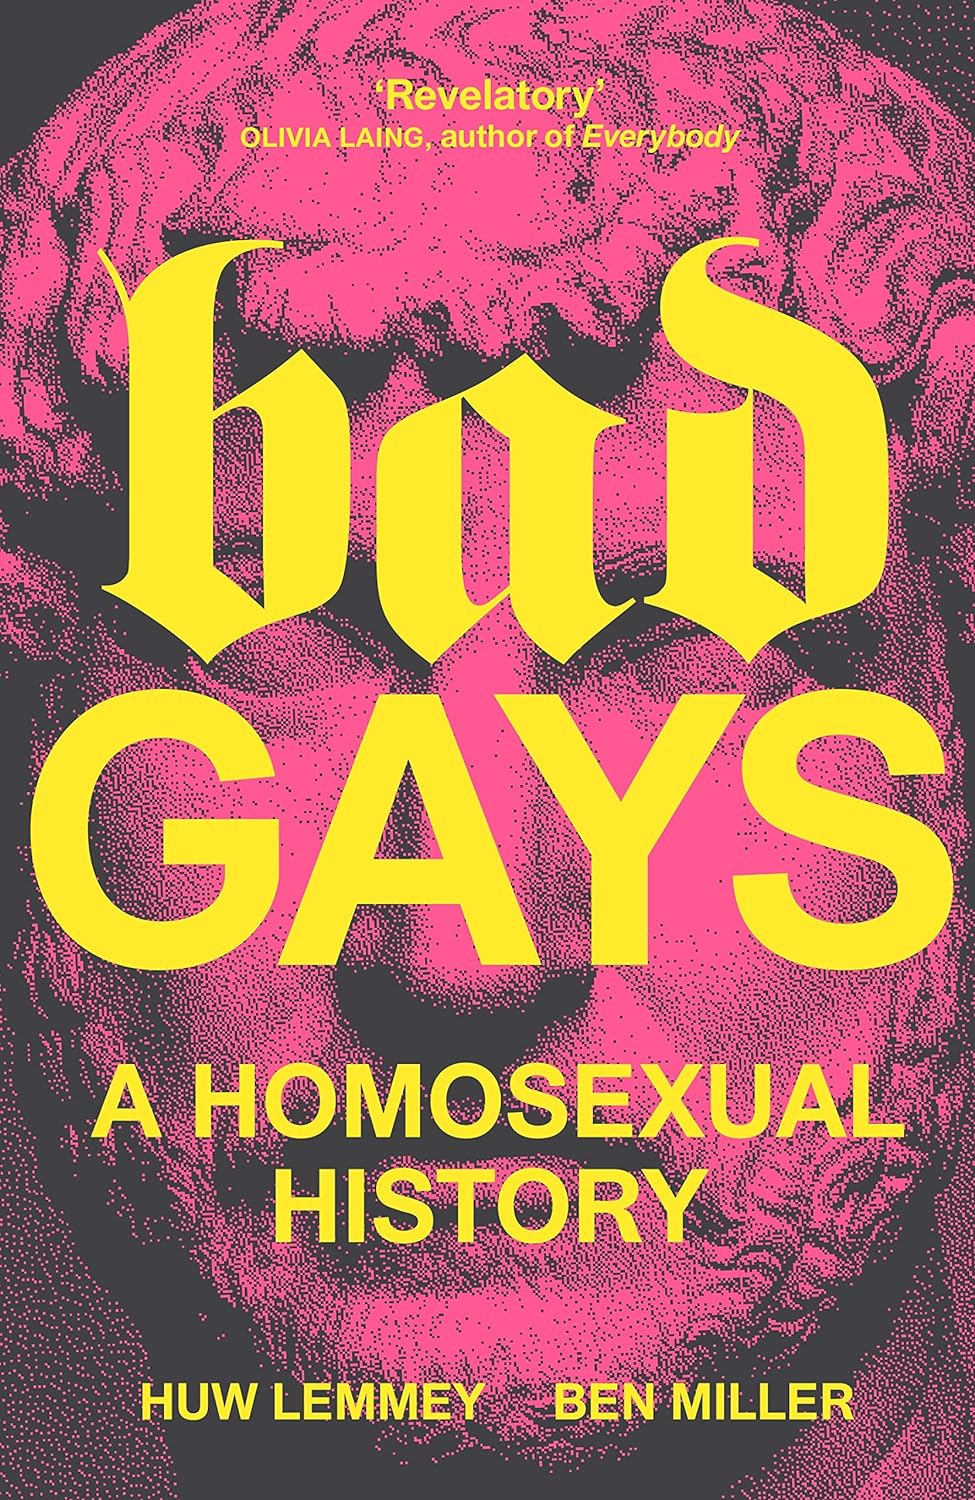 Bad Gays: A Homosexual History